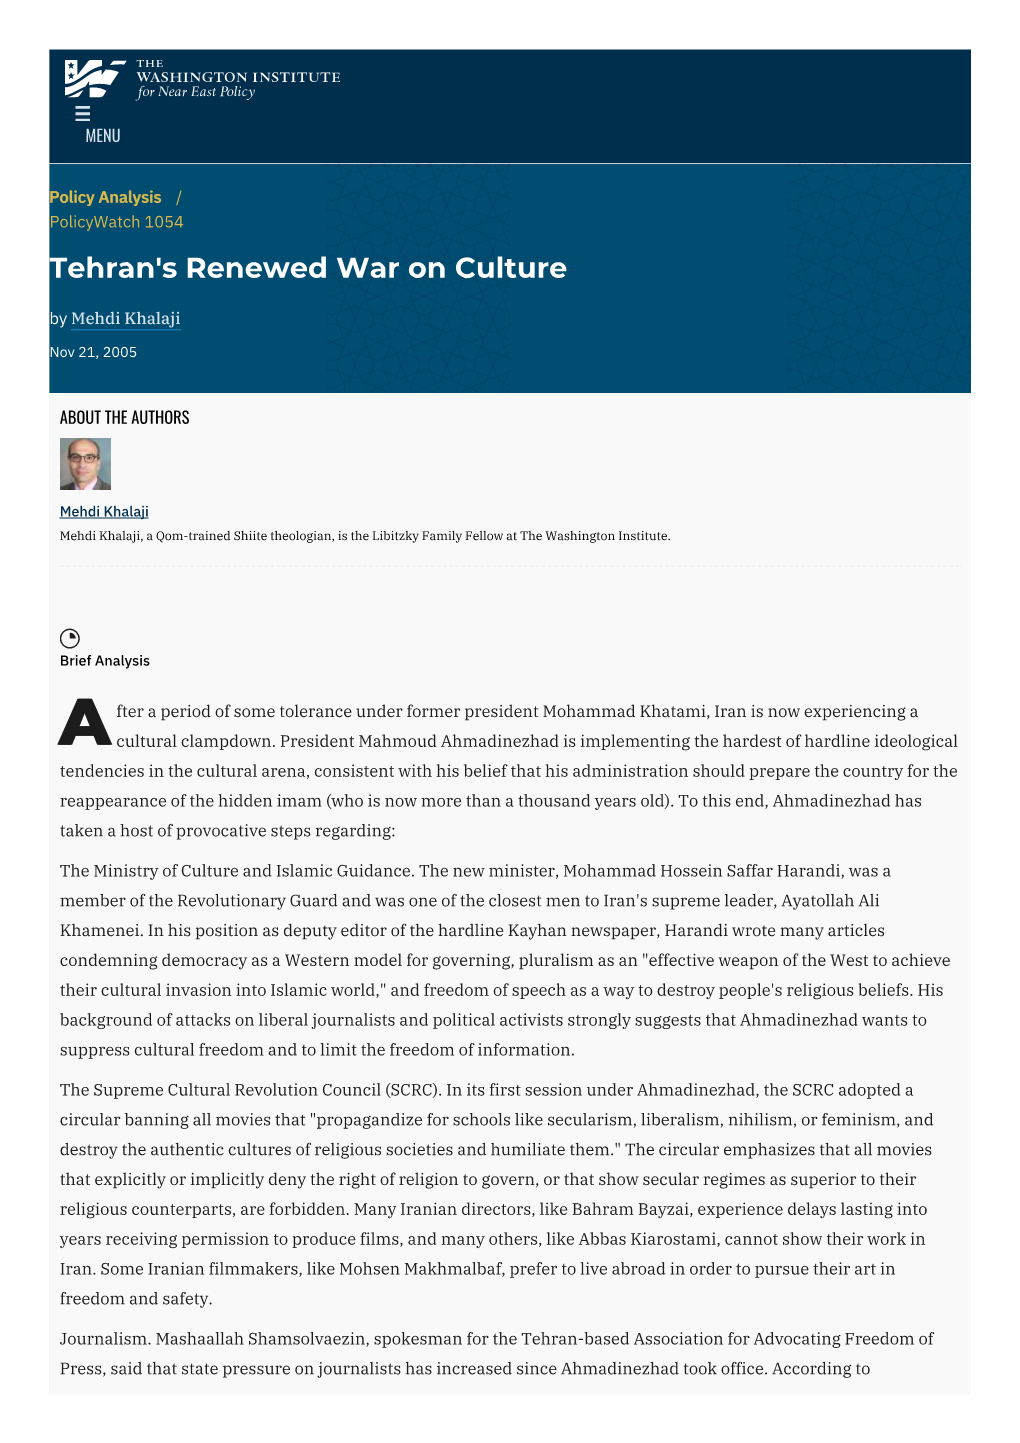 Tehran's Renewed War on Culture | the Washington Institute